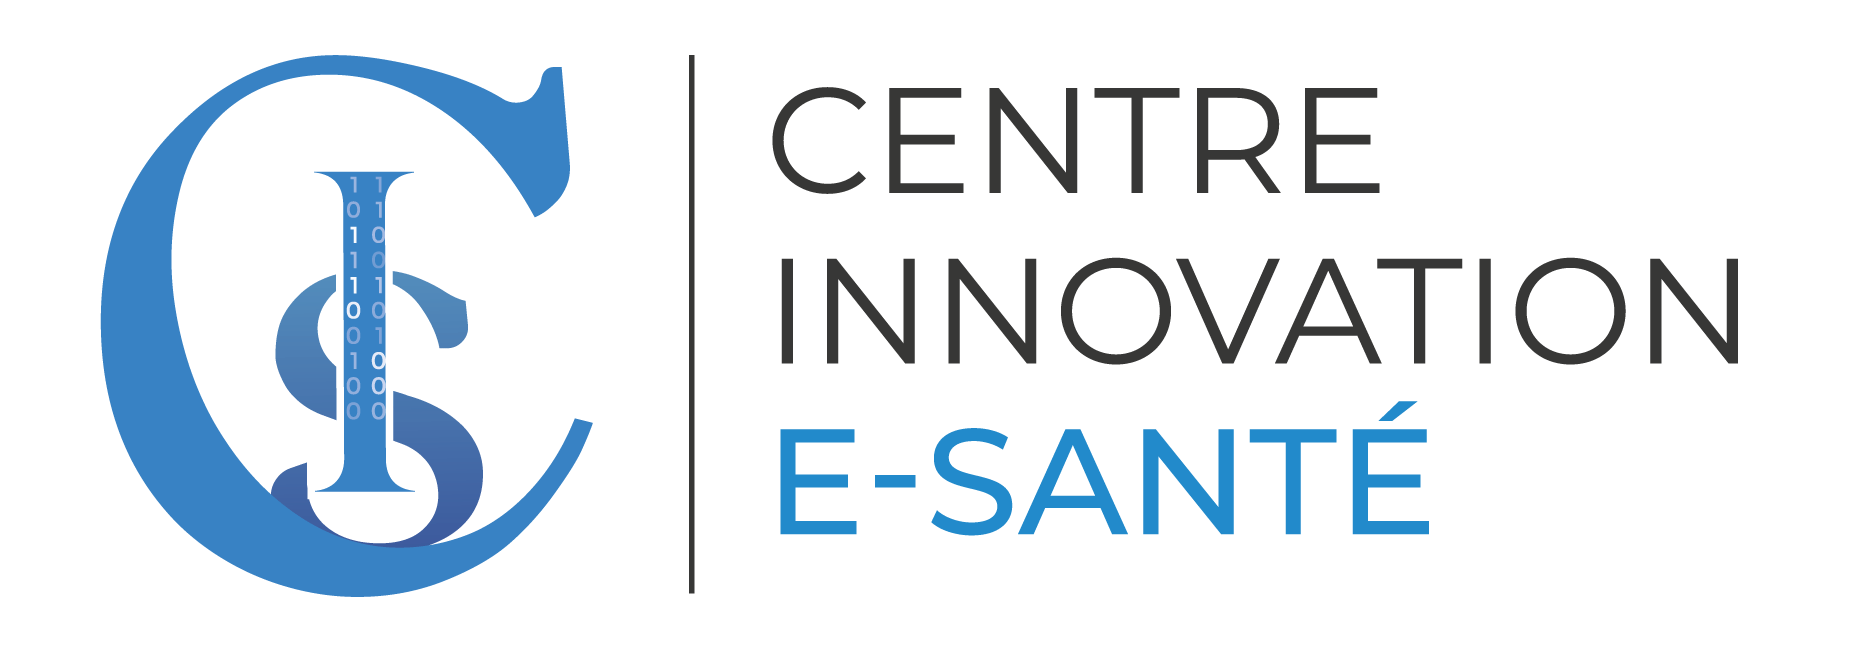 Centre Innovation e-santé